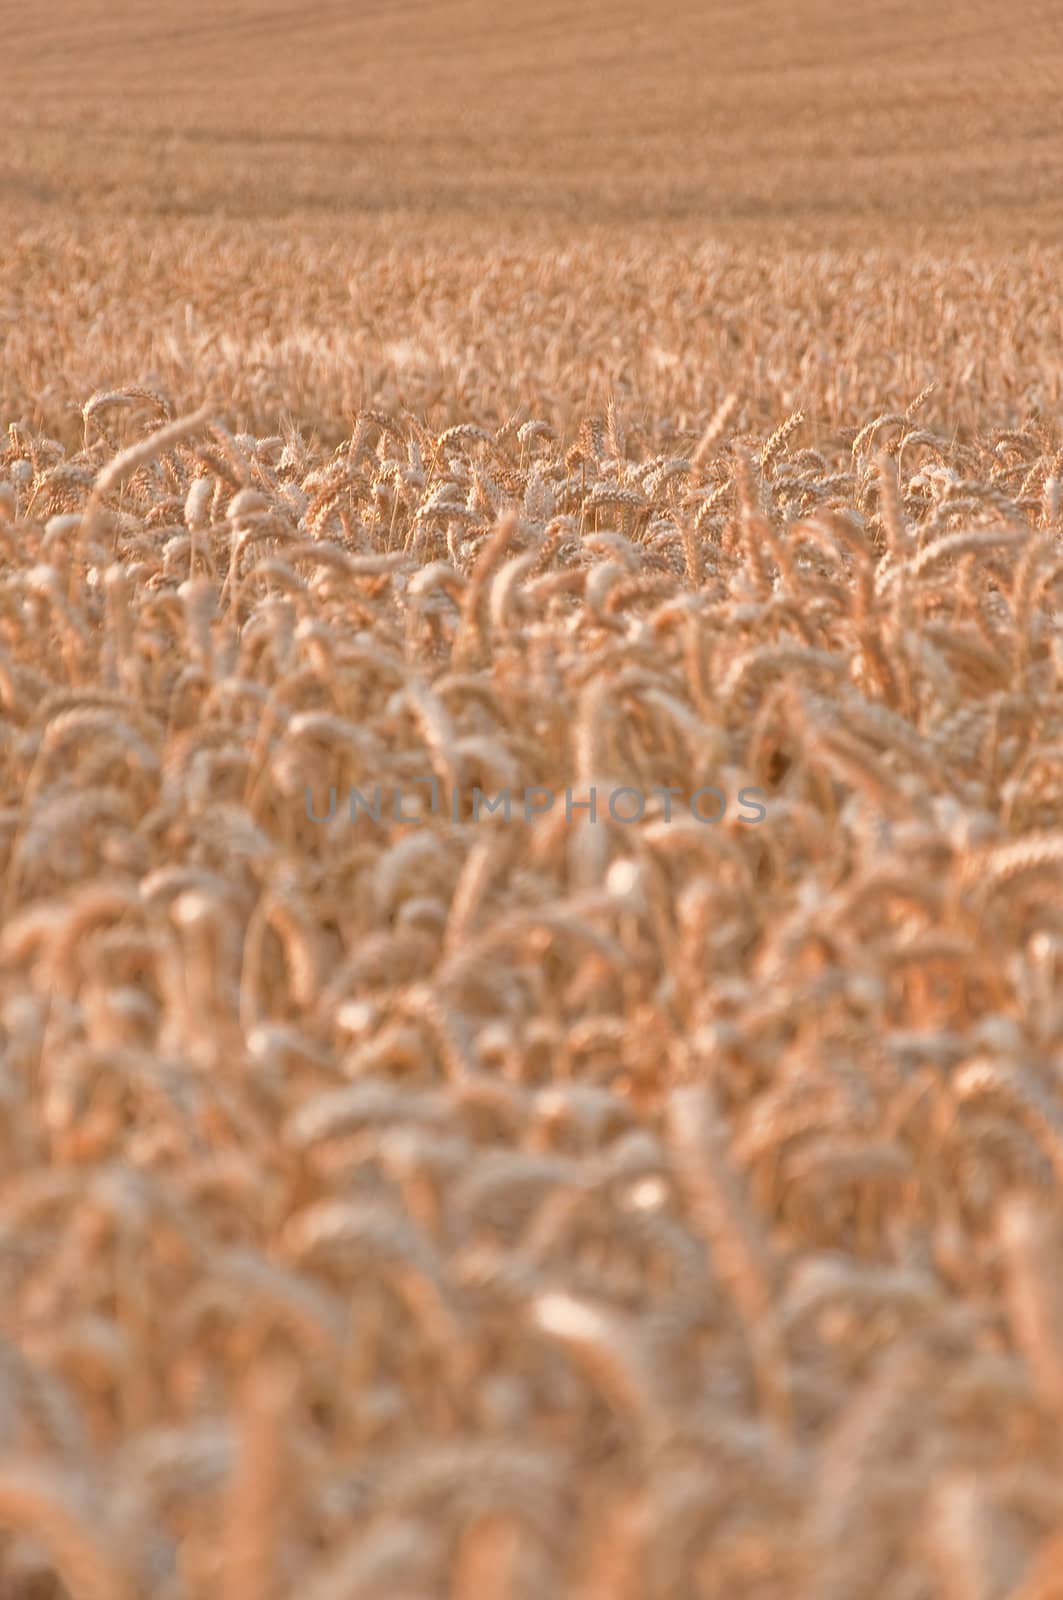 Golden wheat field  by ThomasOderud